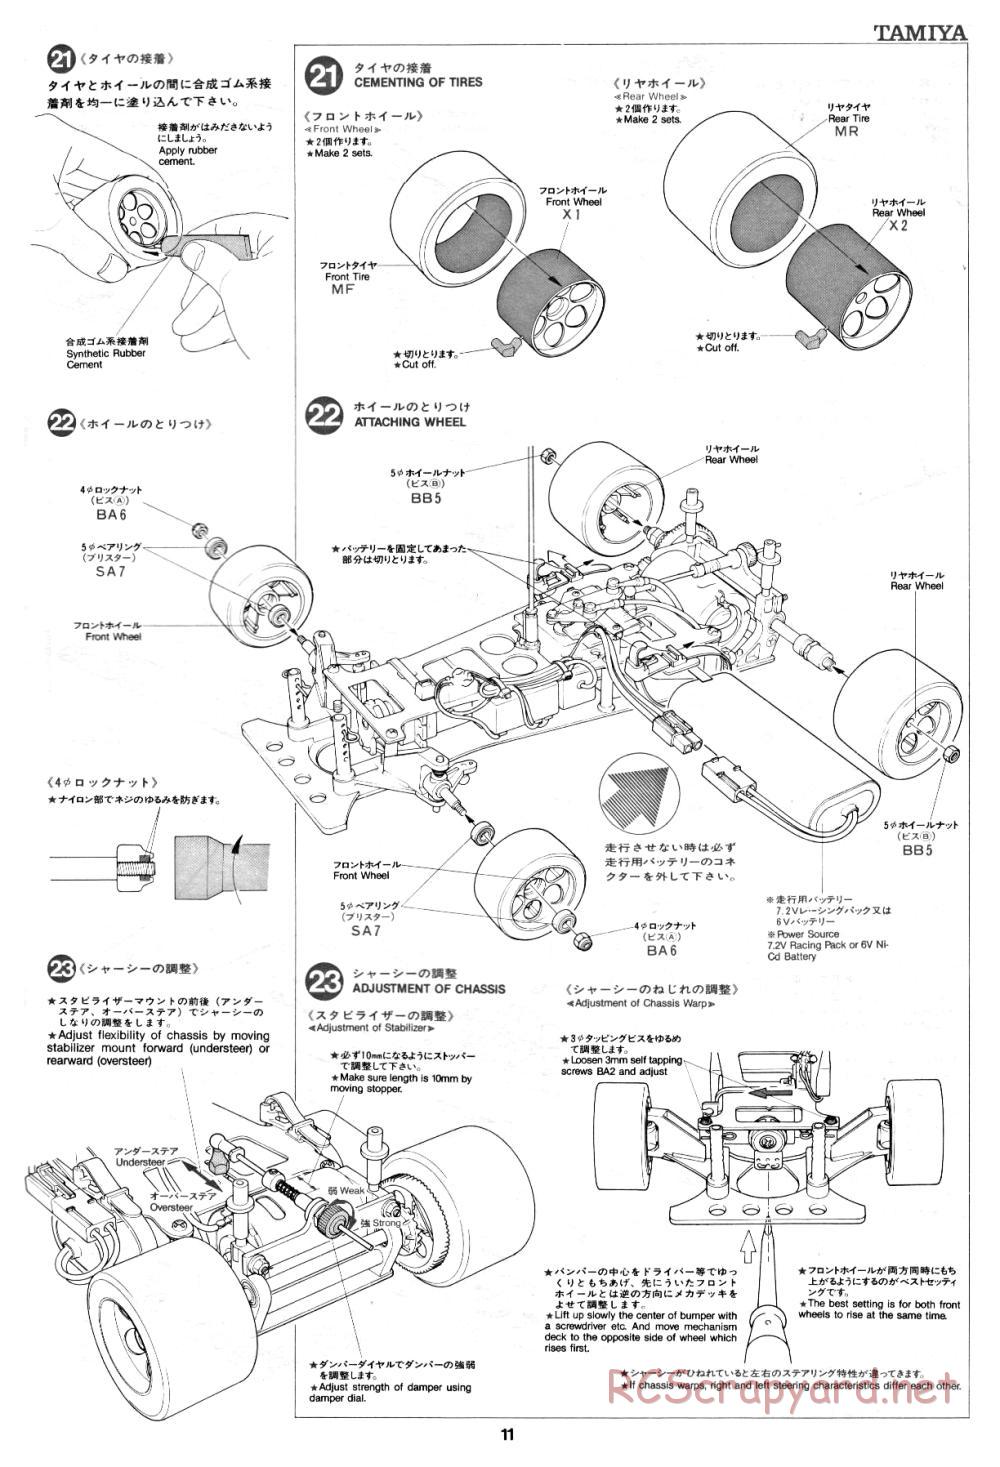 Tamiya - Toyota Tom's 84C - RM MK.6 - 58049 - Manual - Page 11